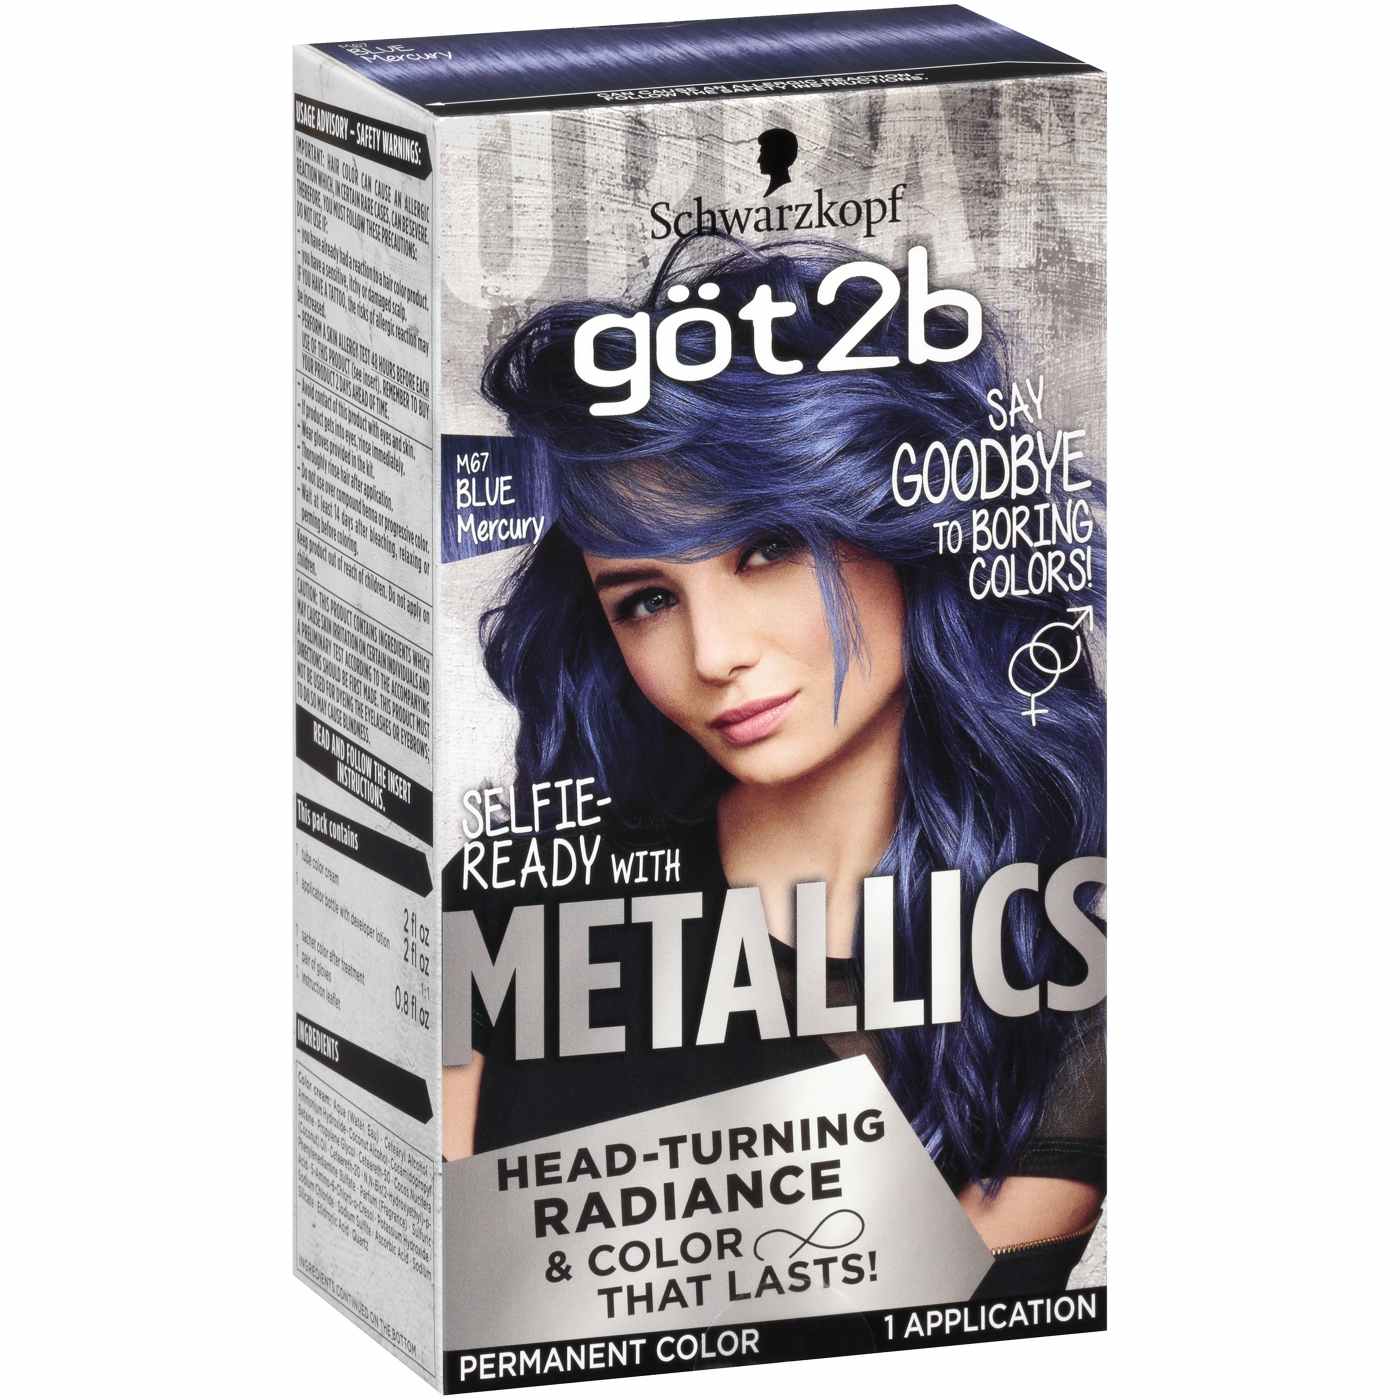 Got2b Metallics Permanent Hair Color, M67 Blue Mercury; image 2 of 4